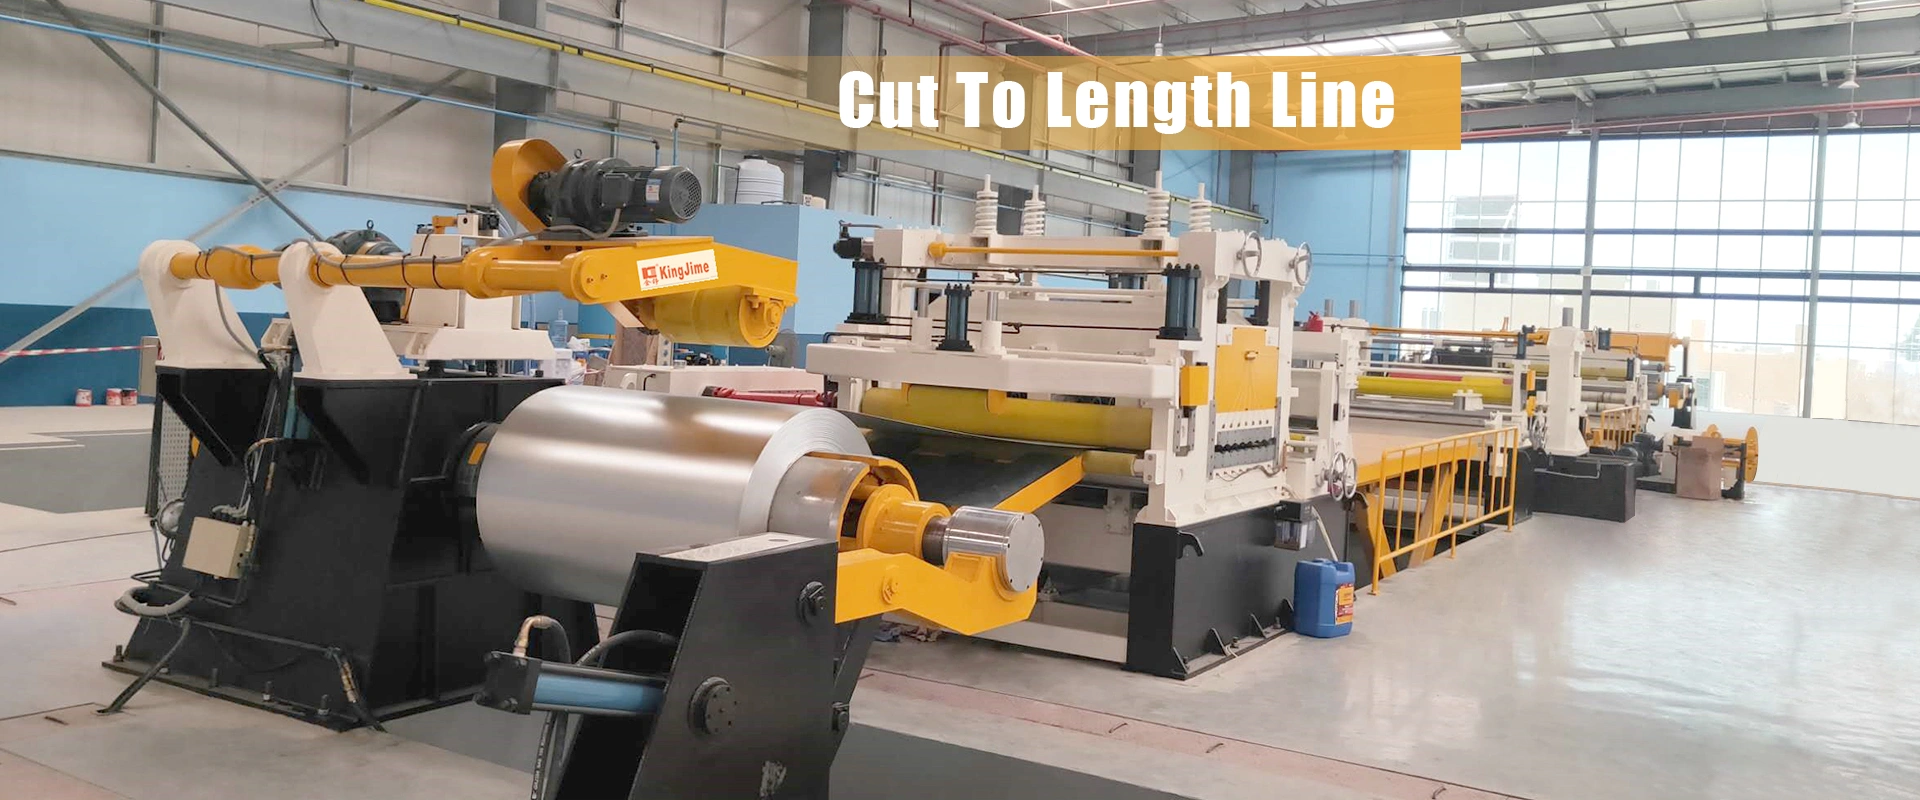 Cut To Length Line